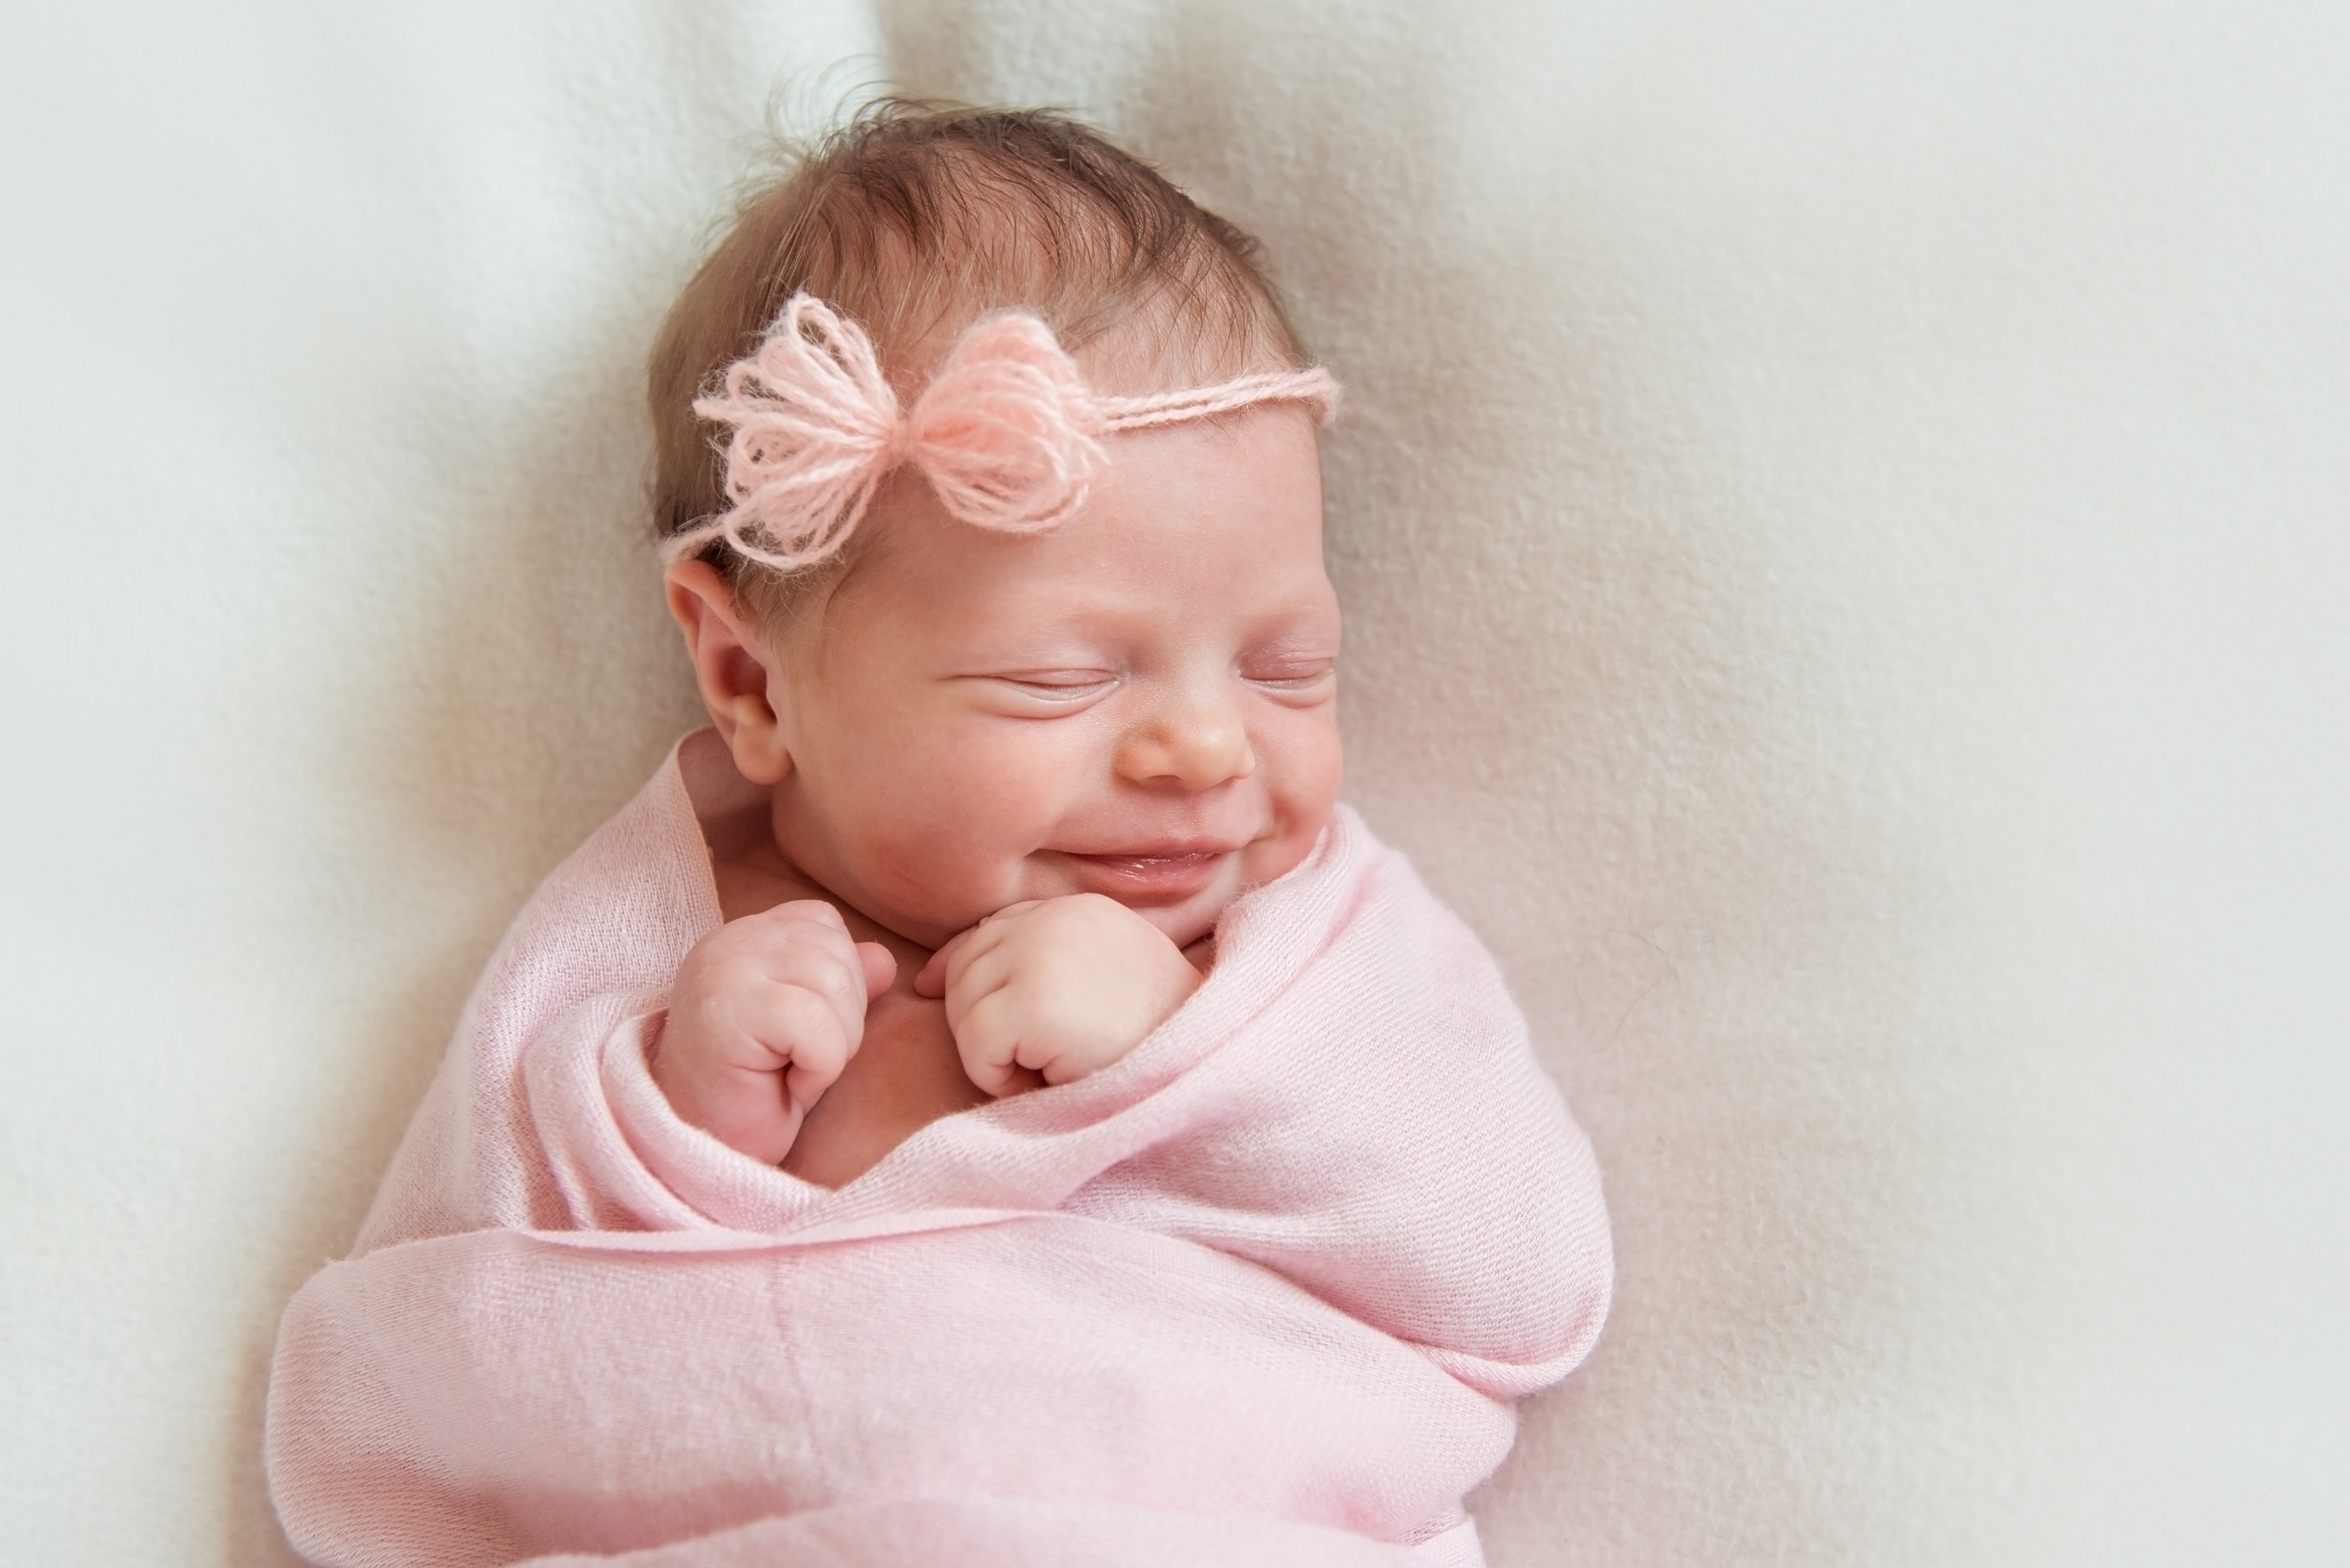 About Newborn Sleep | Newborn Baby Sleeping Tips